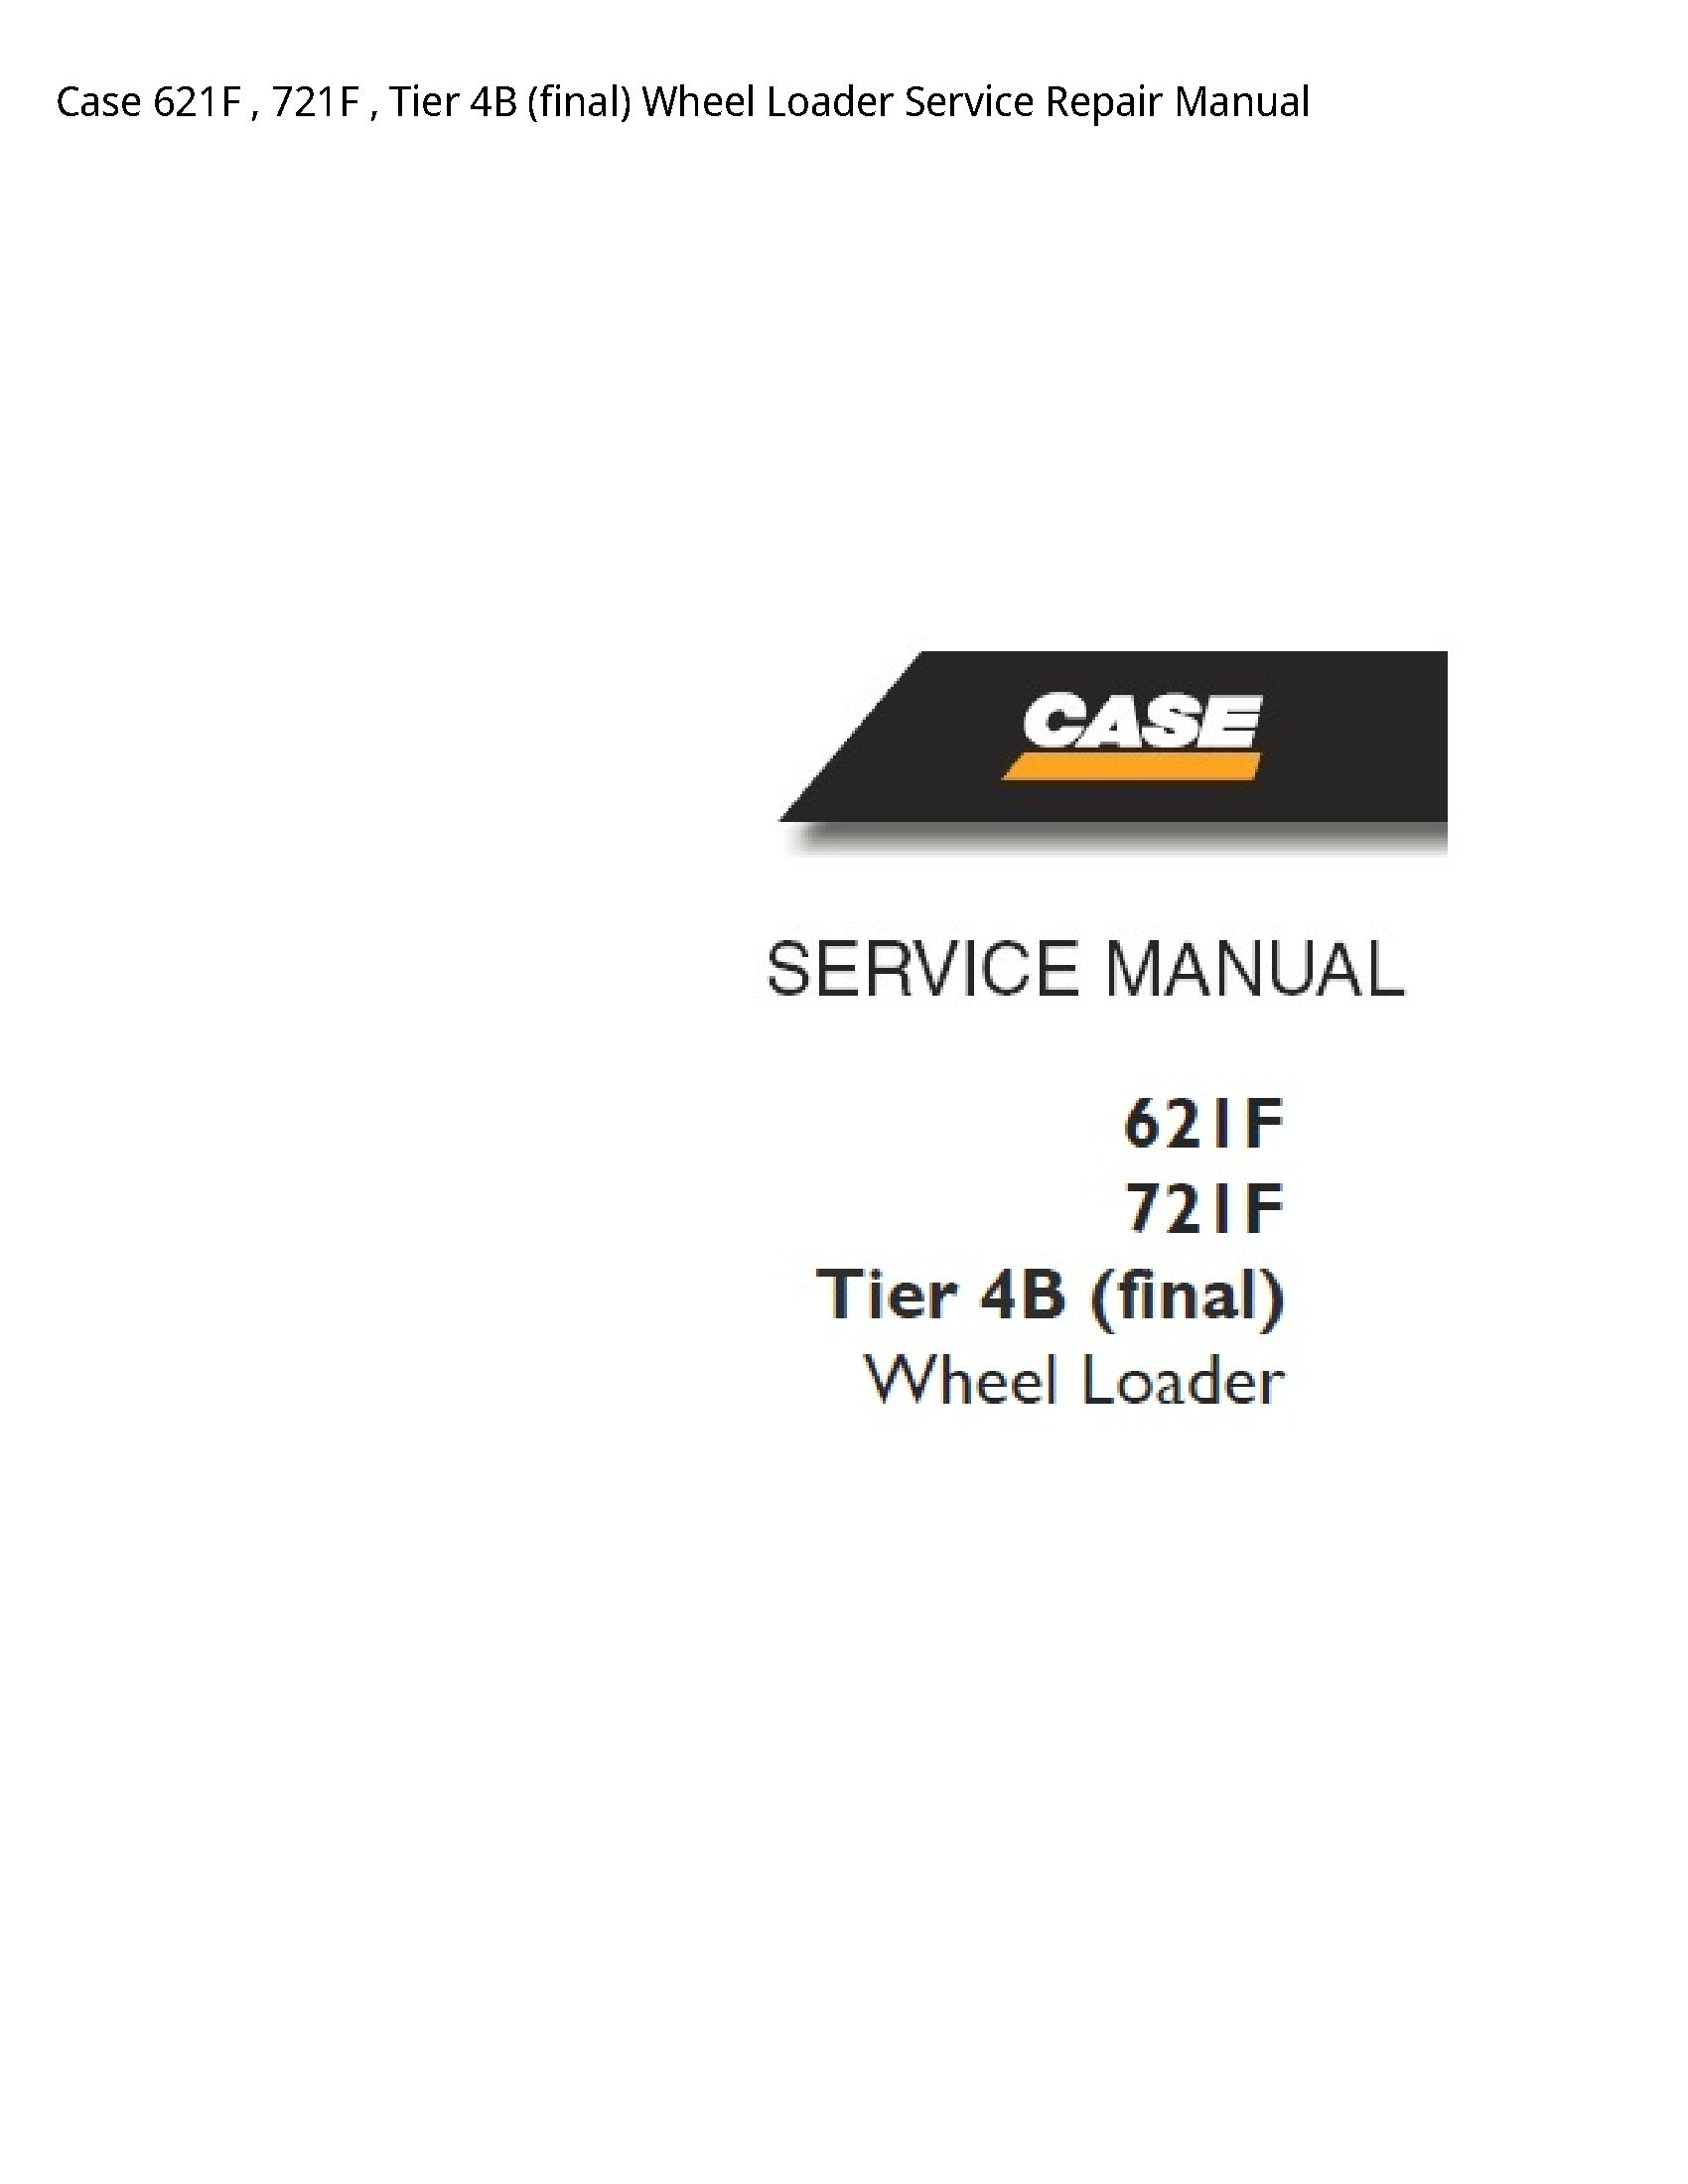 Case/Case IH 621F Tier (final) Wheel Loader manual